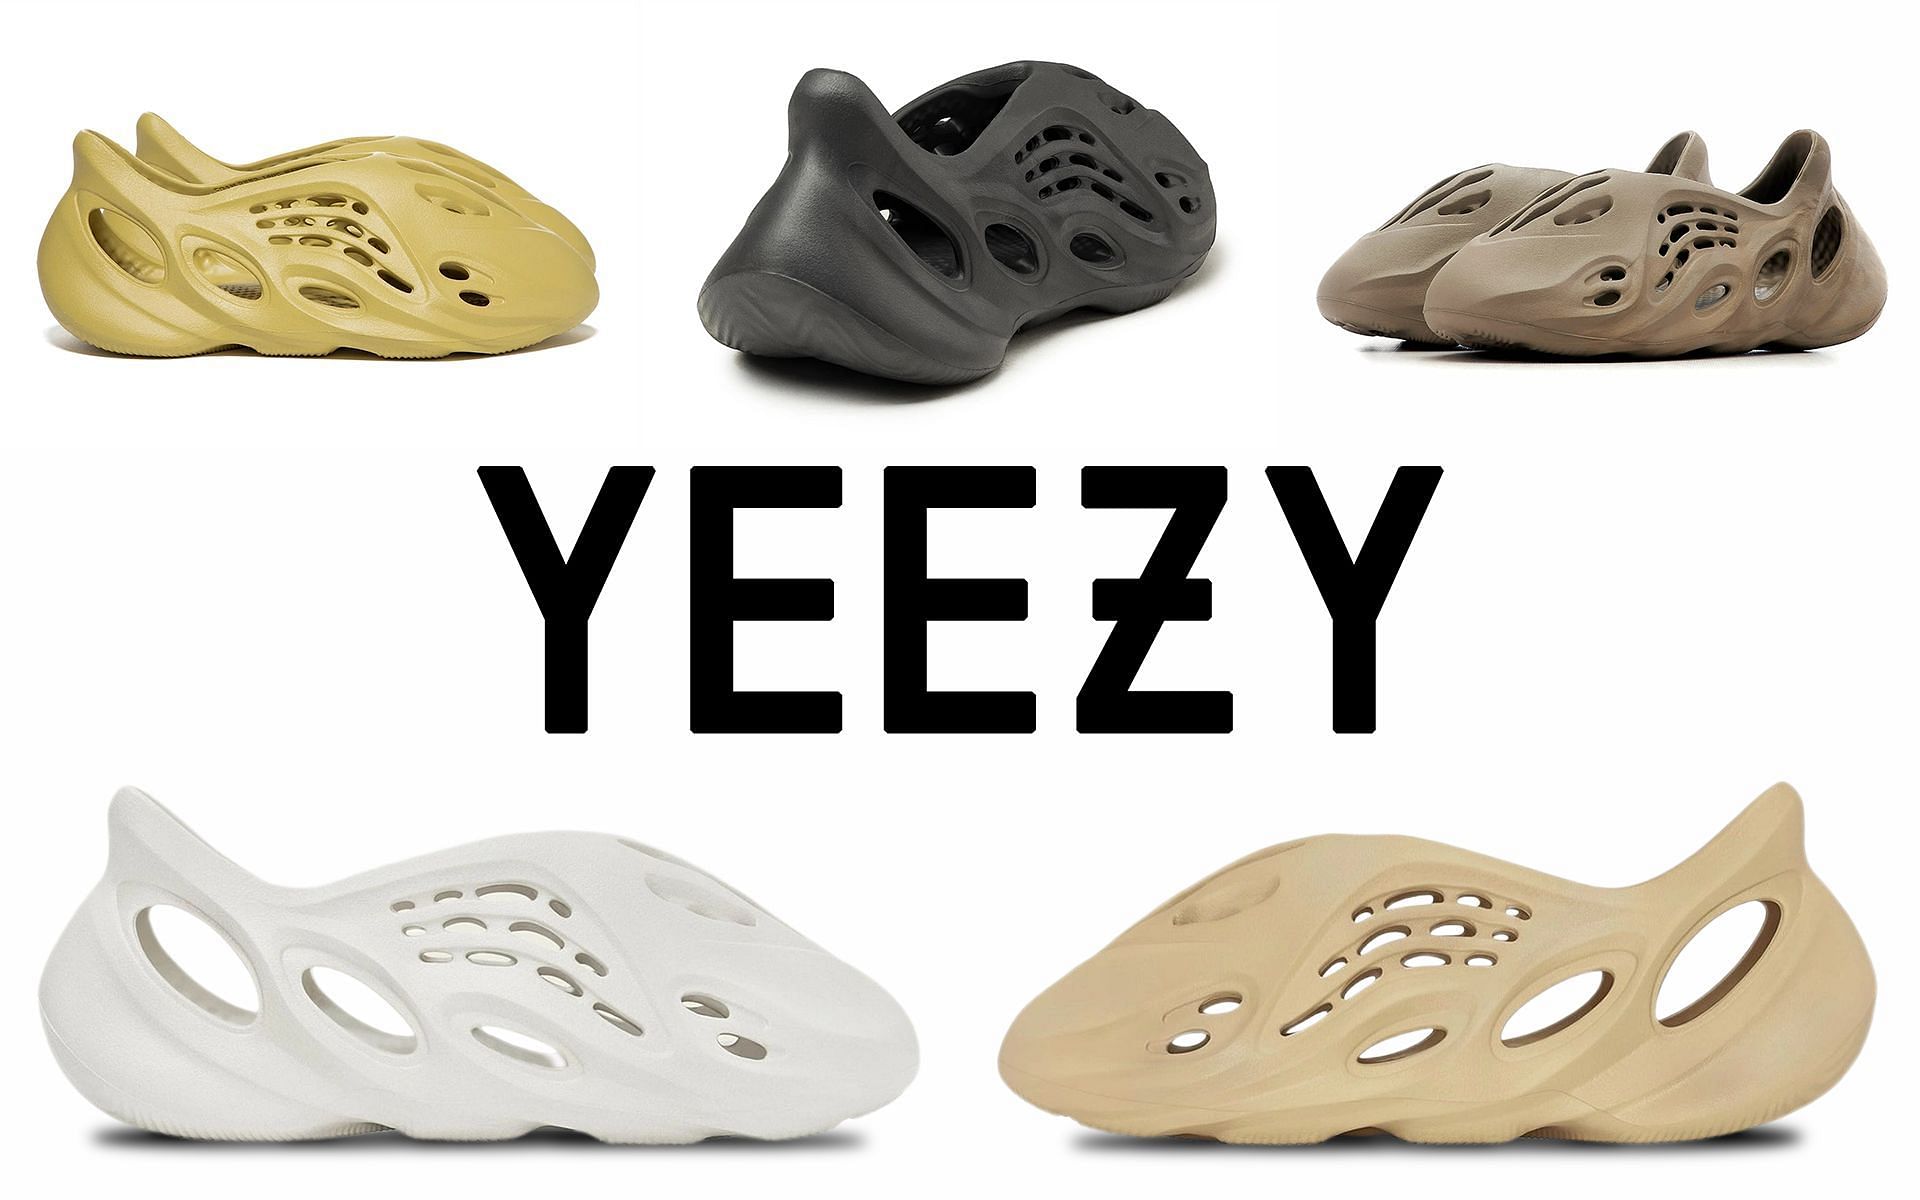 5 best Adidas Yeezy Foam Runner colorways released in 2022